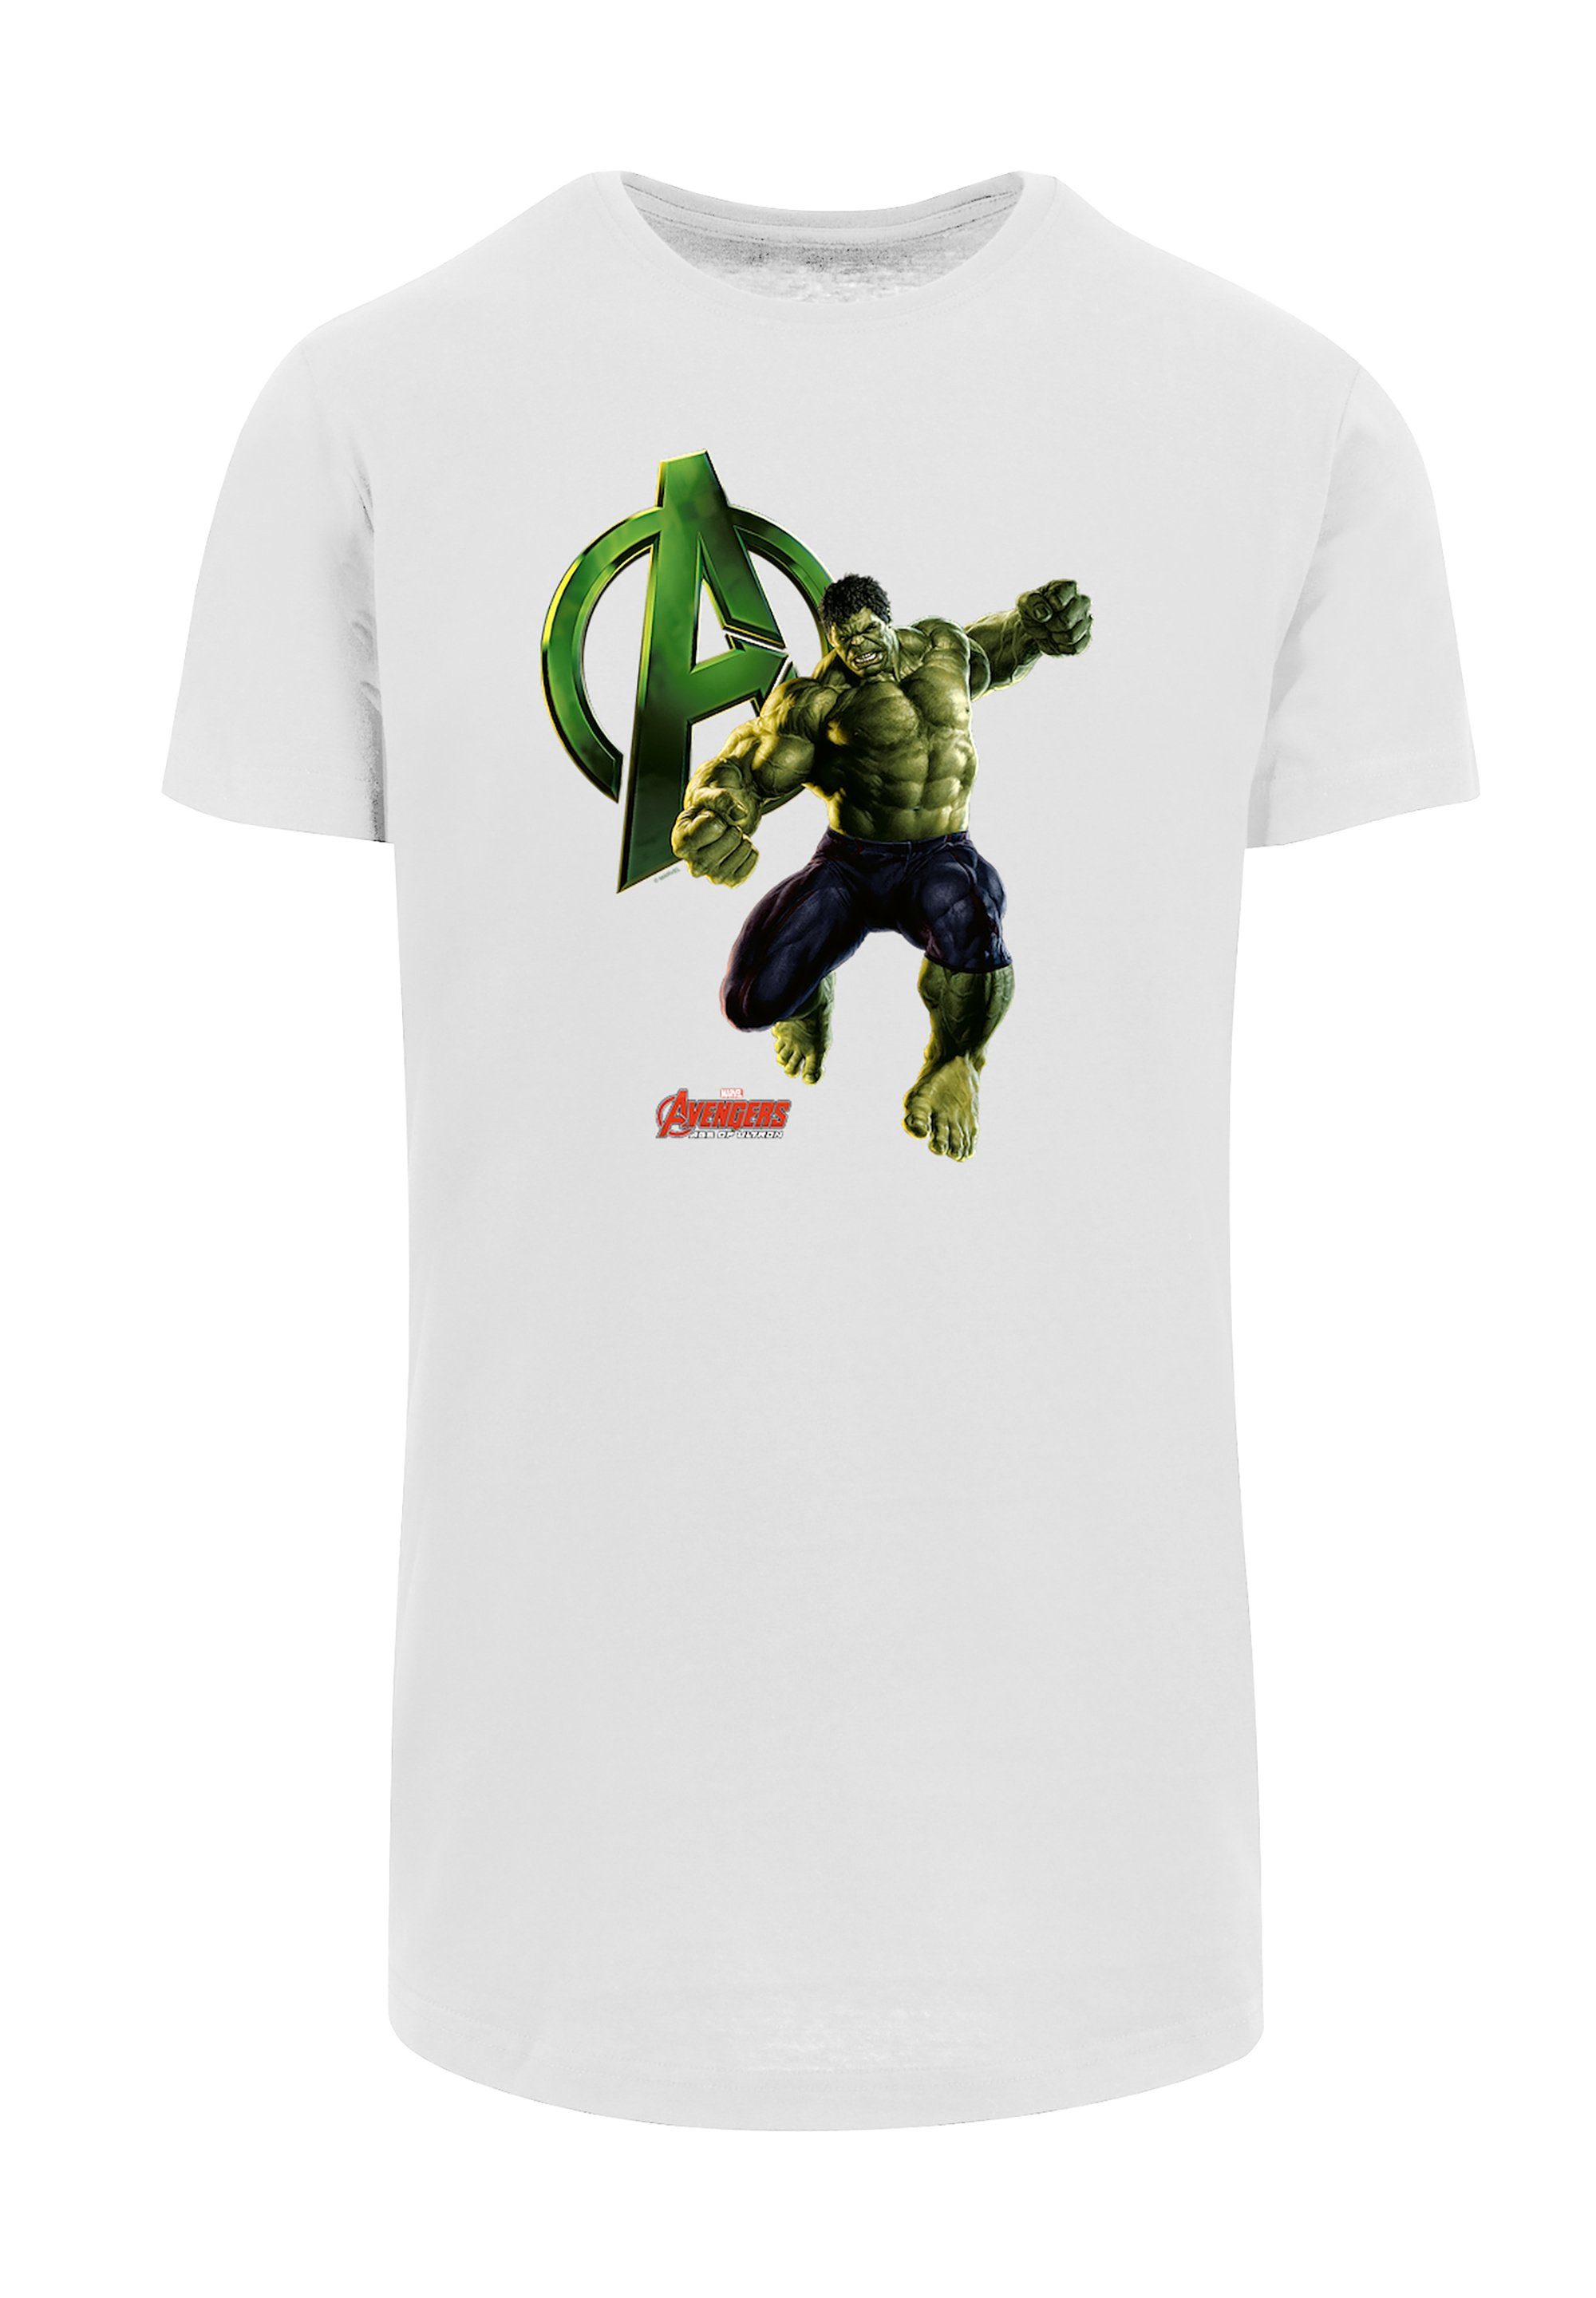 Print T-Shirt Hulk F4NT4STIC Avengers Marvel of Age Ultron Incredible